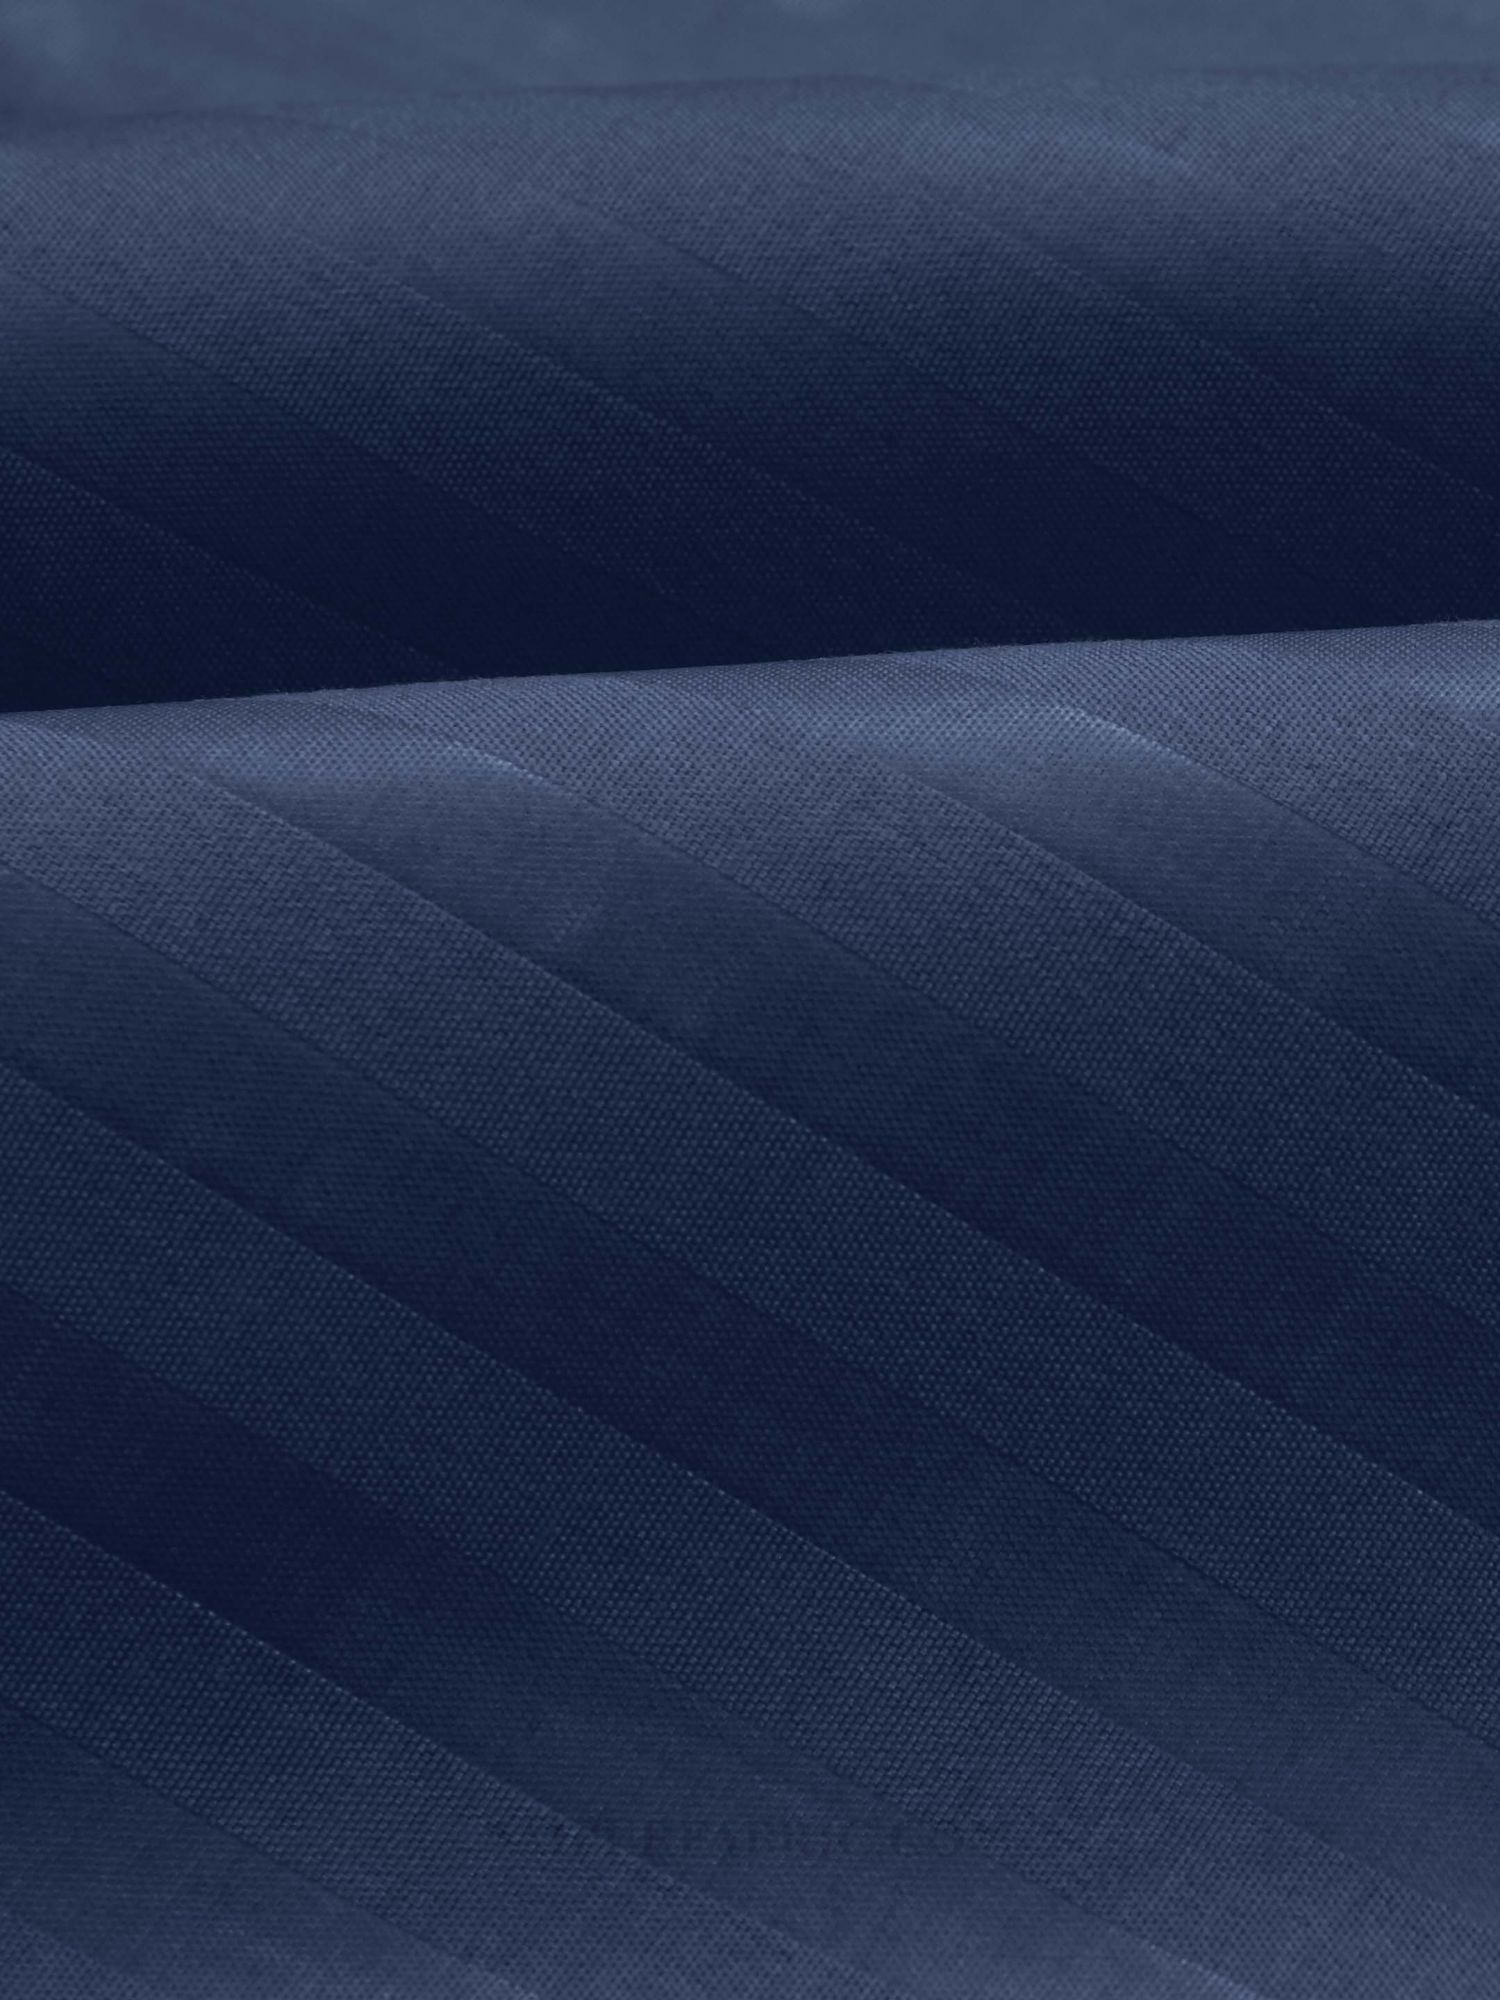 Navy Blue Satin Stripes Single BedSheet